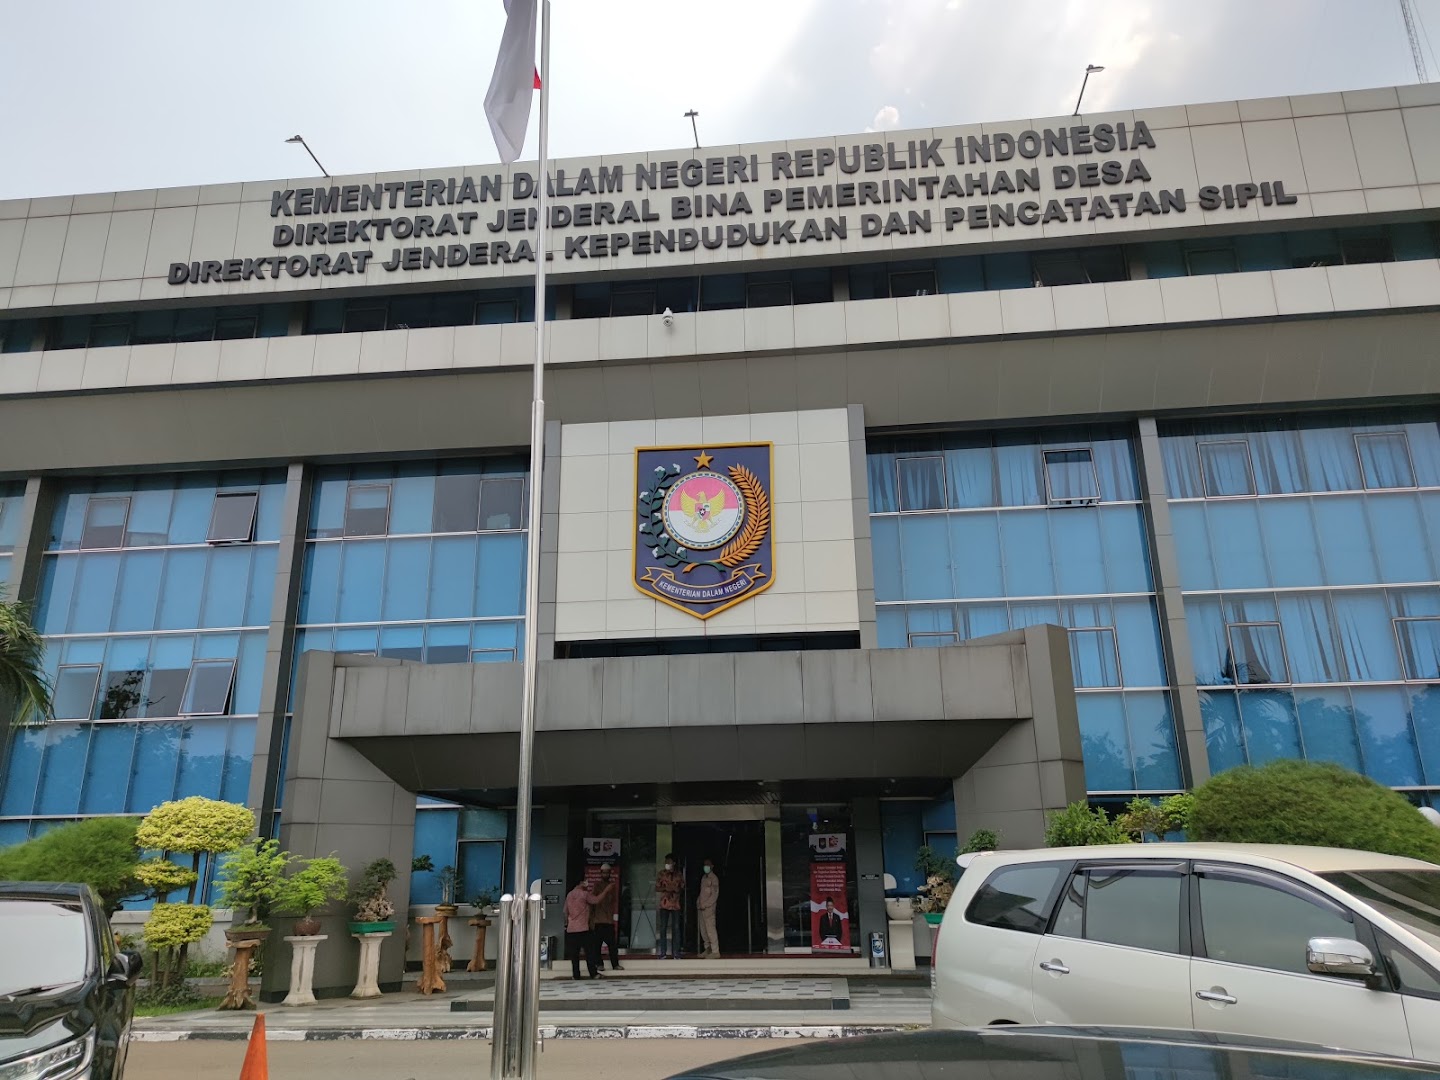 Gambar Direktorat Jenderal Kependudukan Dan Pencatatan Sipil, Kementerian Dalam Negeri Republik Indonesia